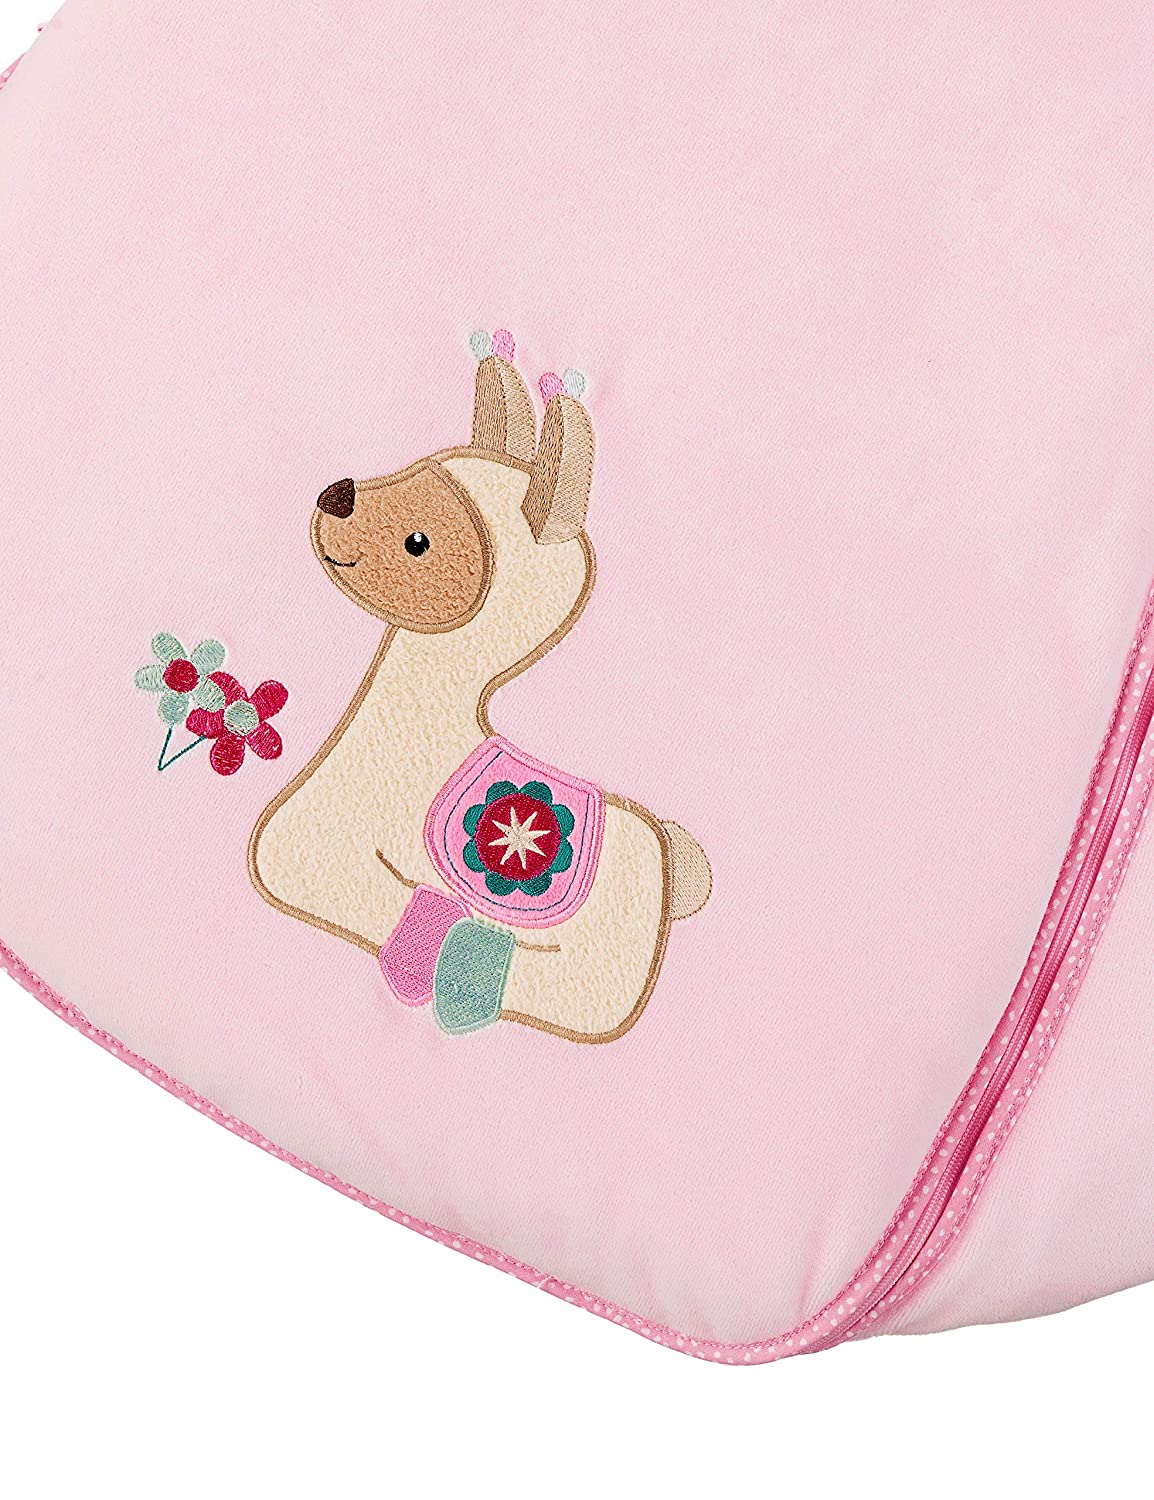 Sterntaler Toddler Sleeping Bag with Removable Sleeves, Heat Regulation, Zip Closure, Size 110, Pink